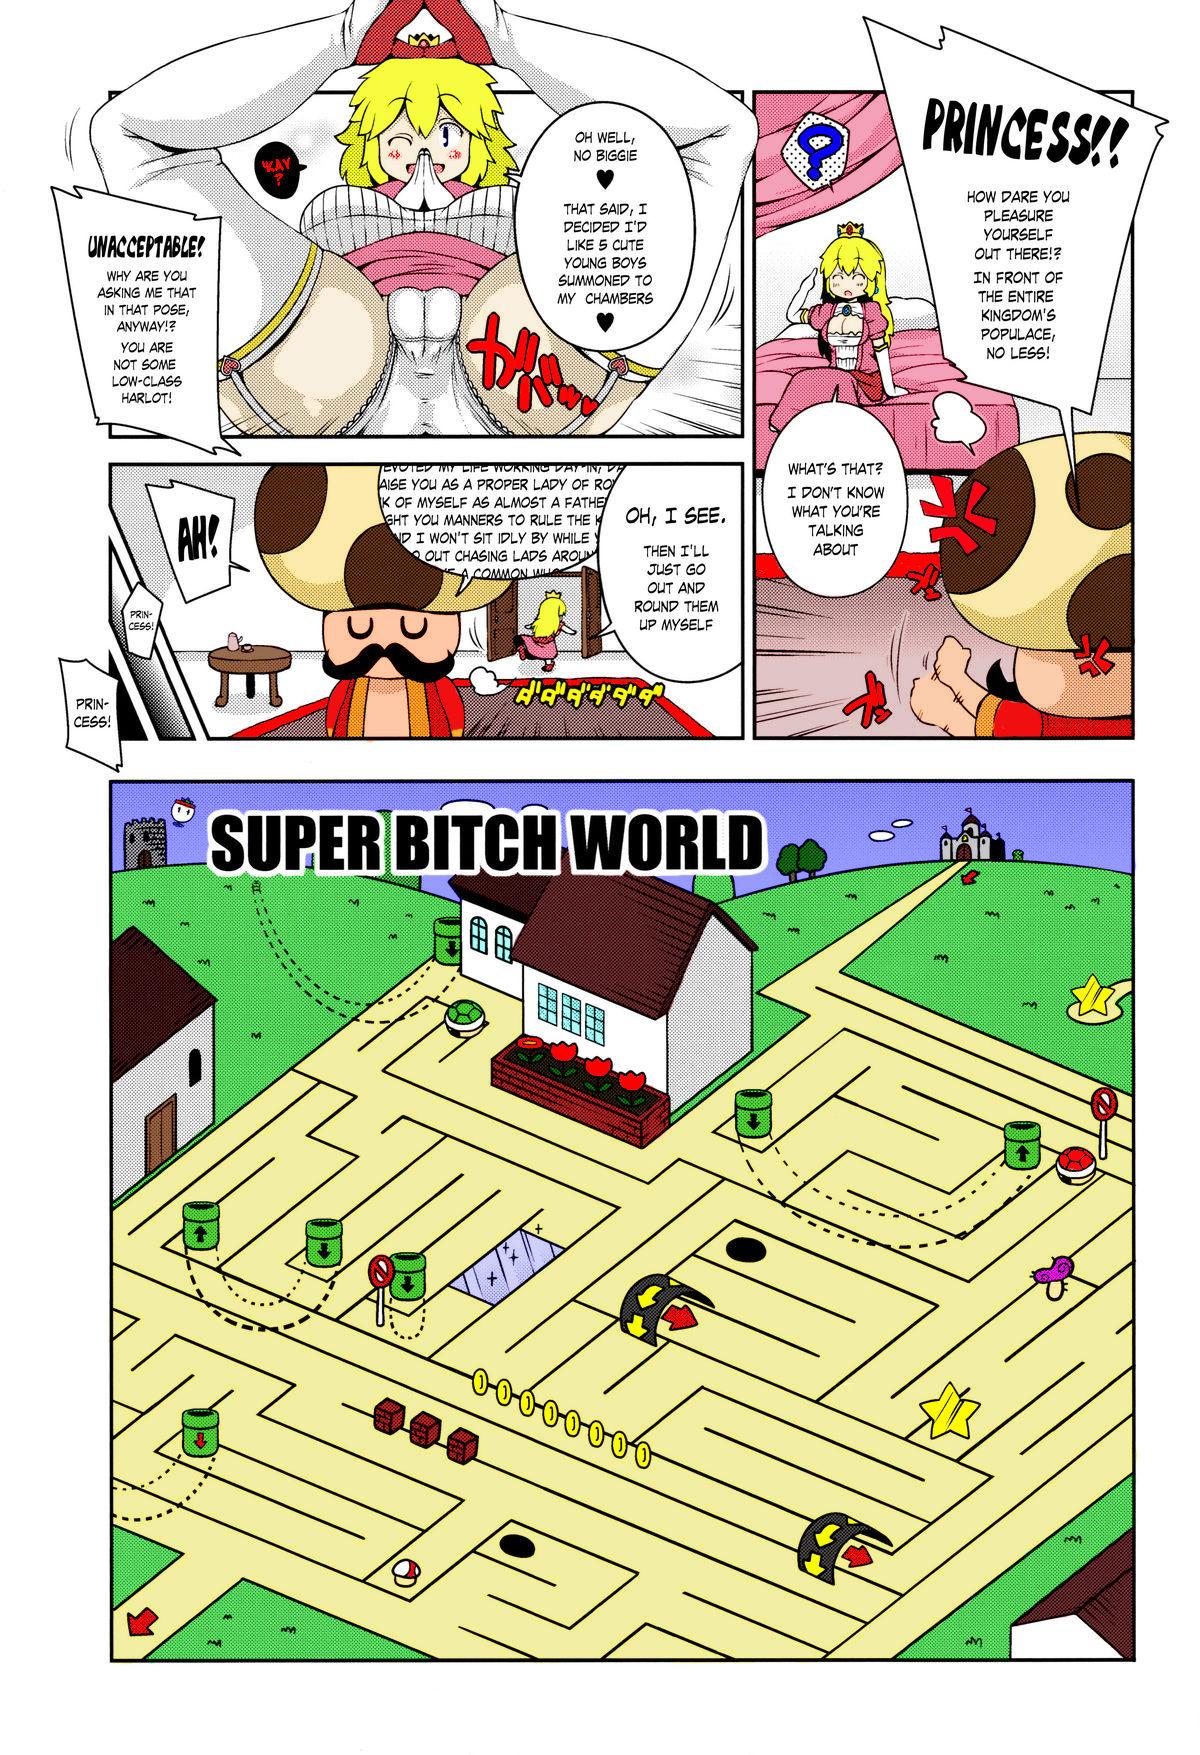 SUPER BITCH WORLD 5